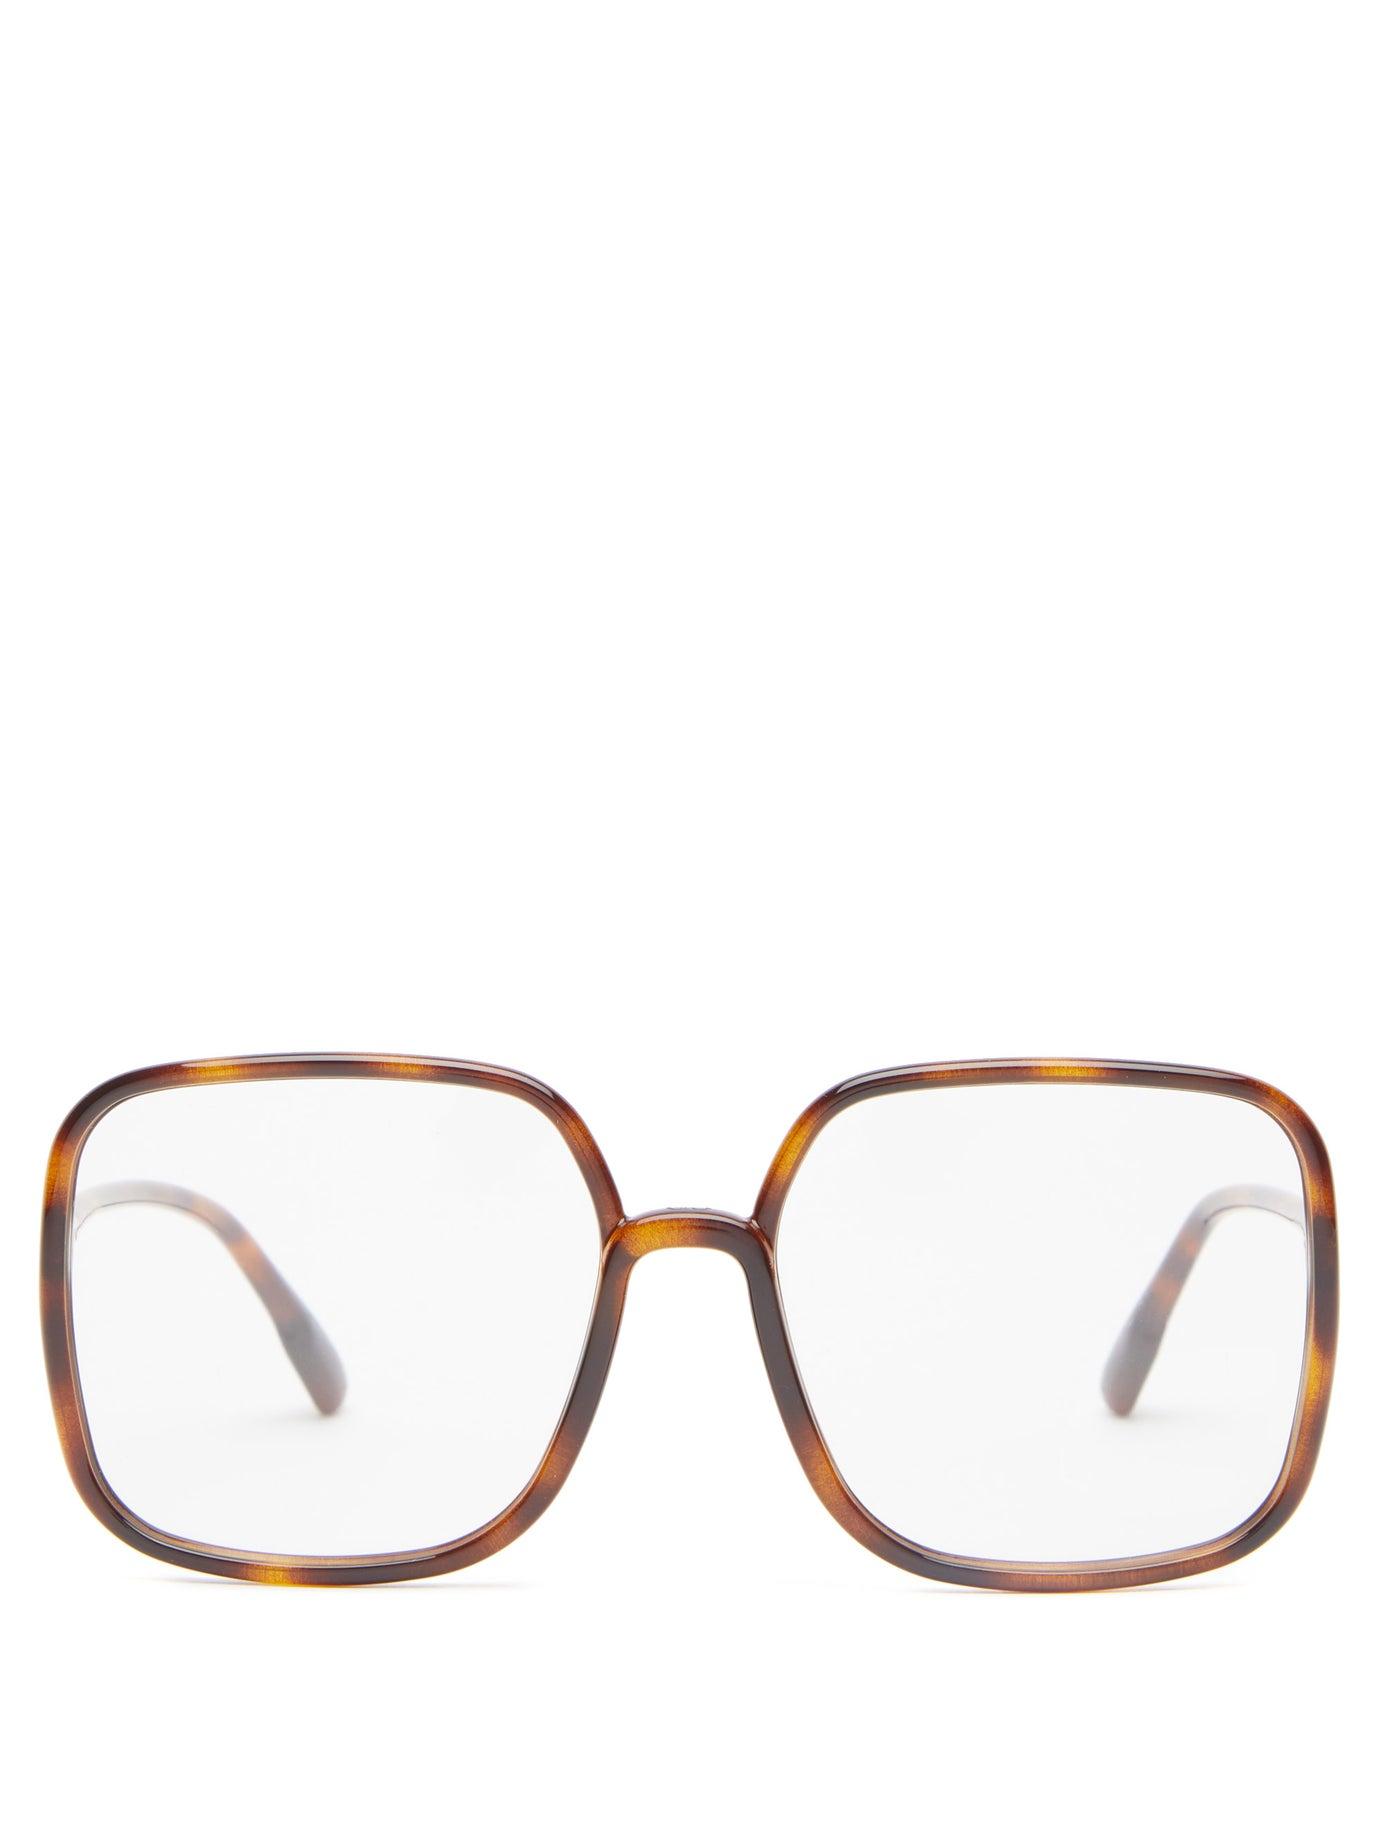 Dior So Stellaire 1 Square Acetate Glasses in Brown | Lyst